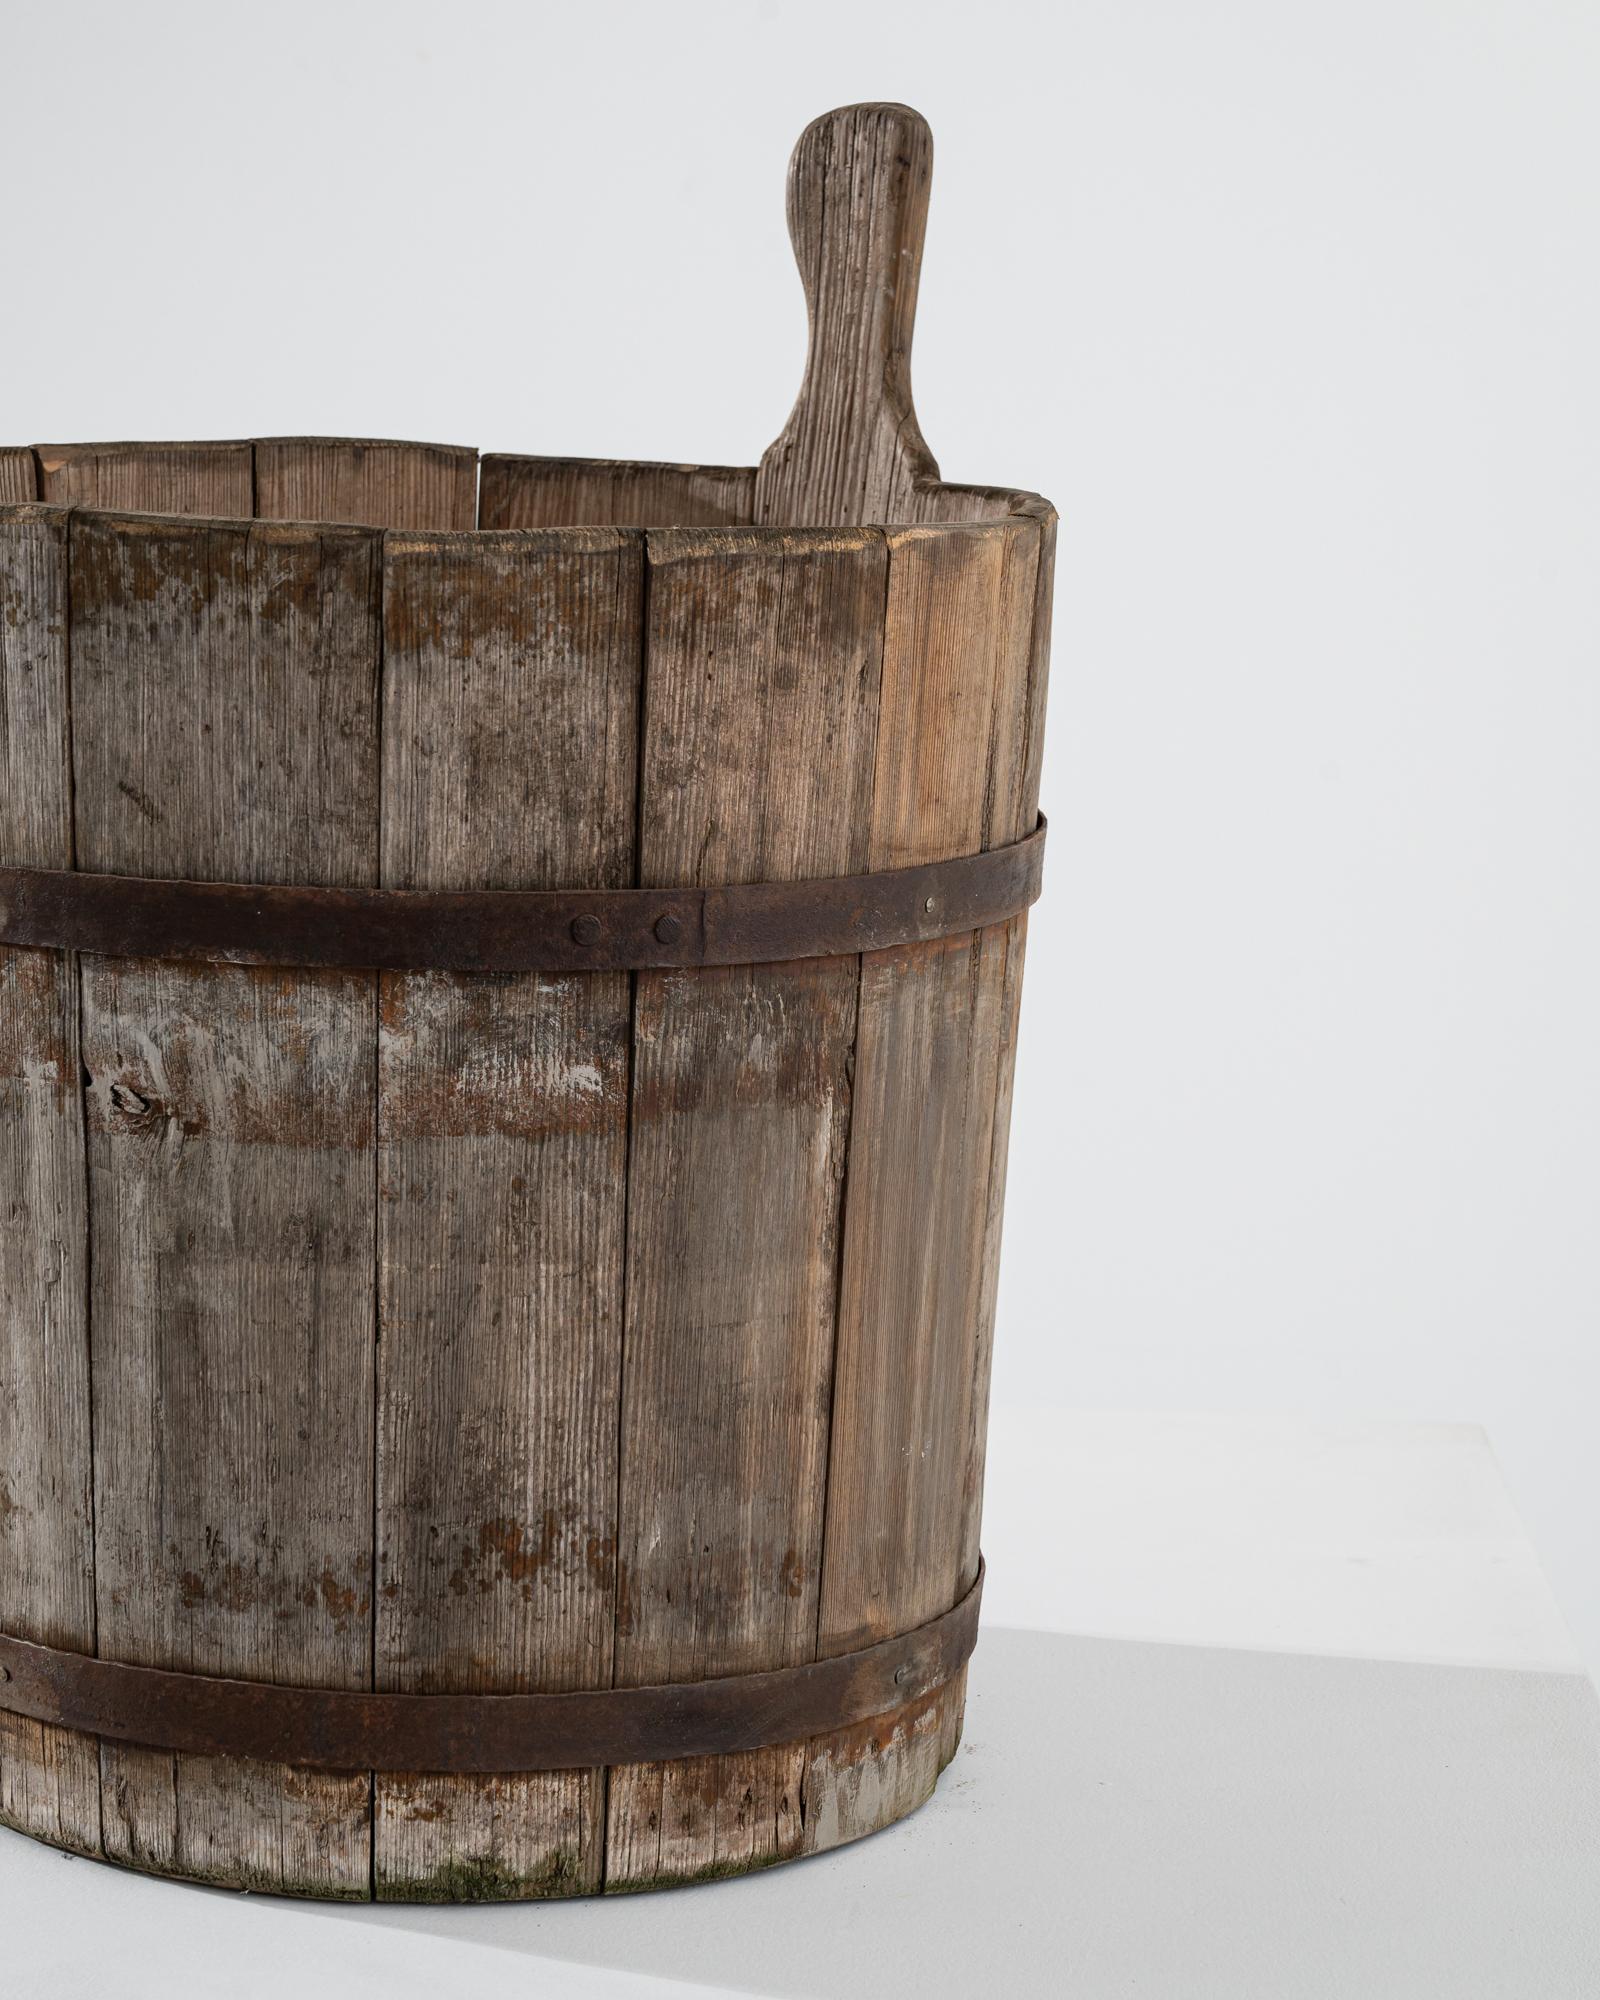 Rustic 19th Century European Wooden Bucket For Sale